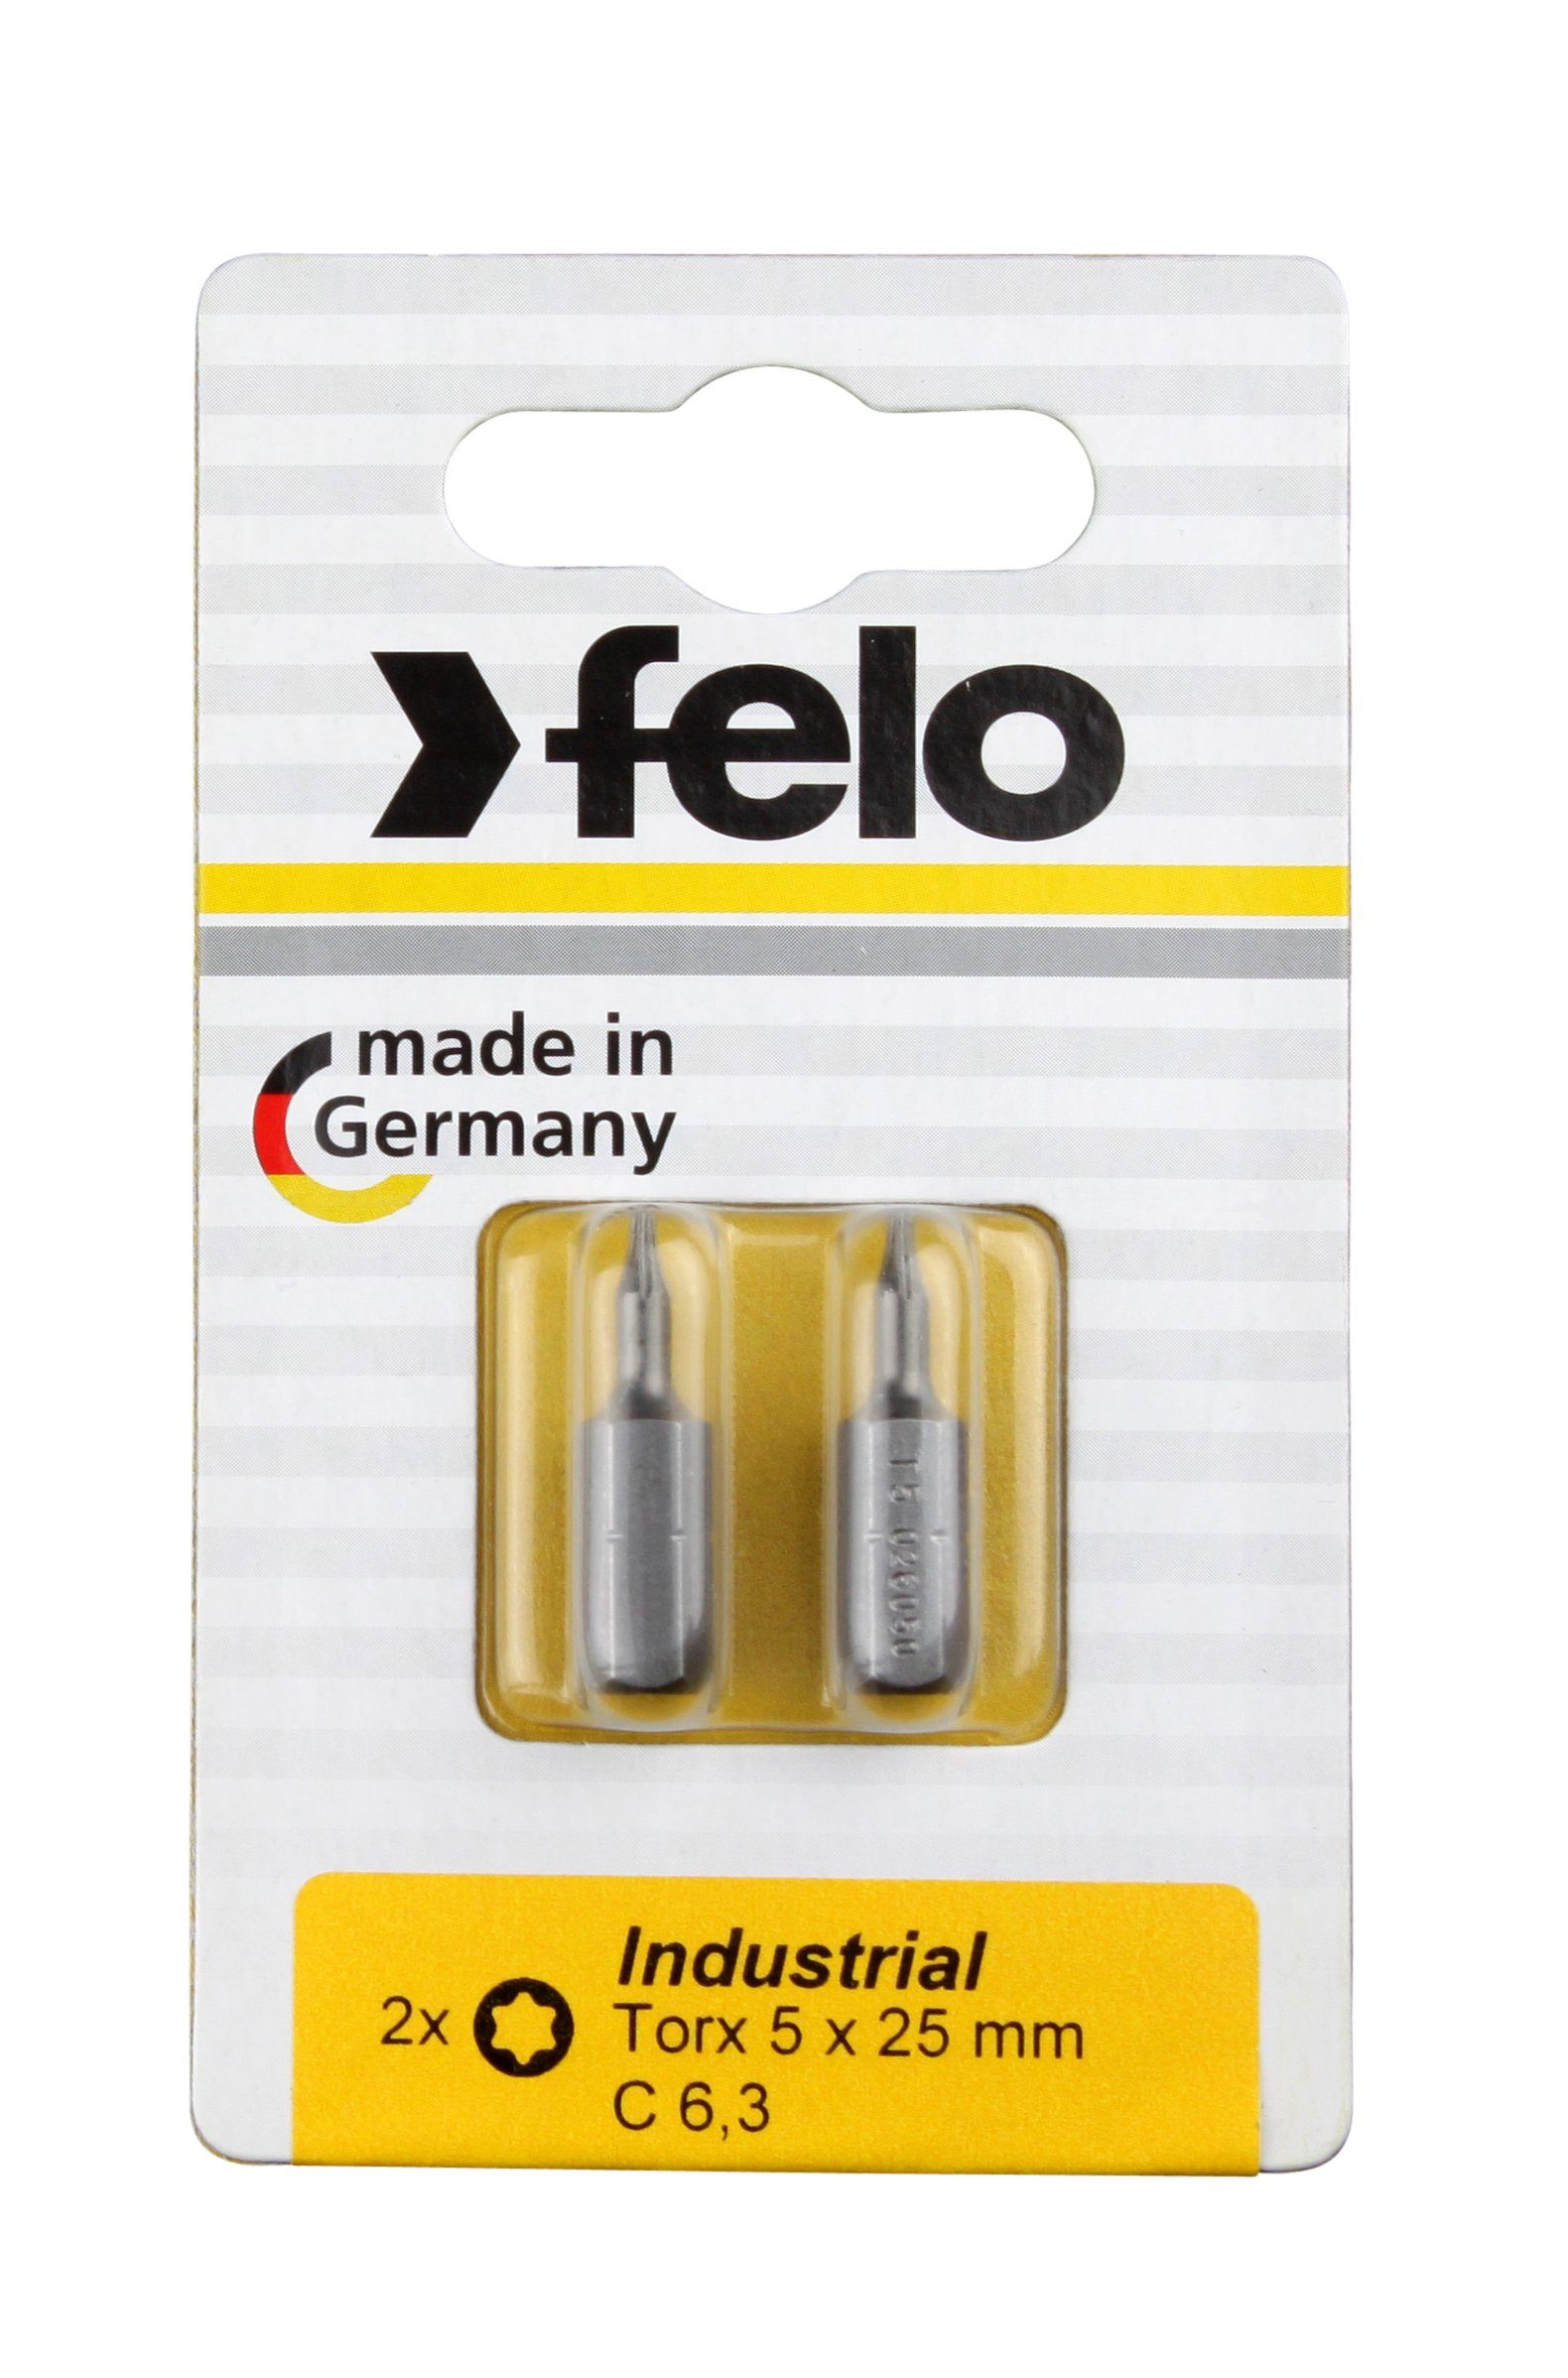 Felo Torx-Bit Felo 25mm, Stk 2x Tx C auf 5 2 x Bit, 6,3 Industrie Karte